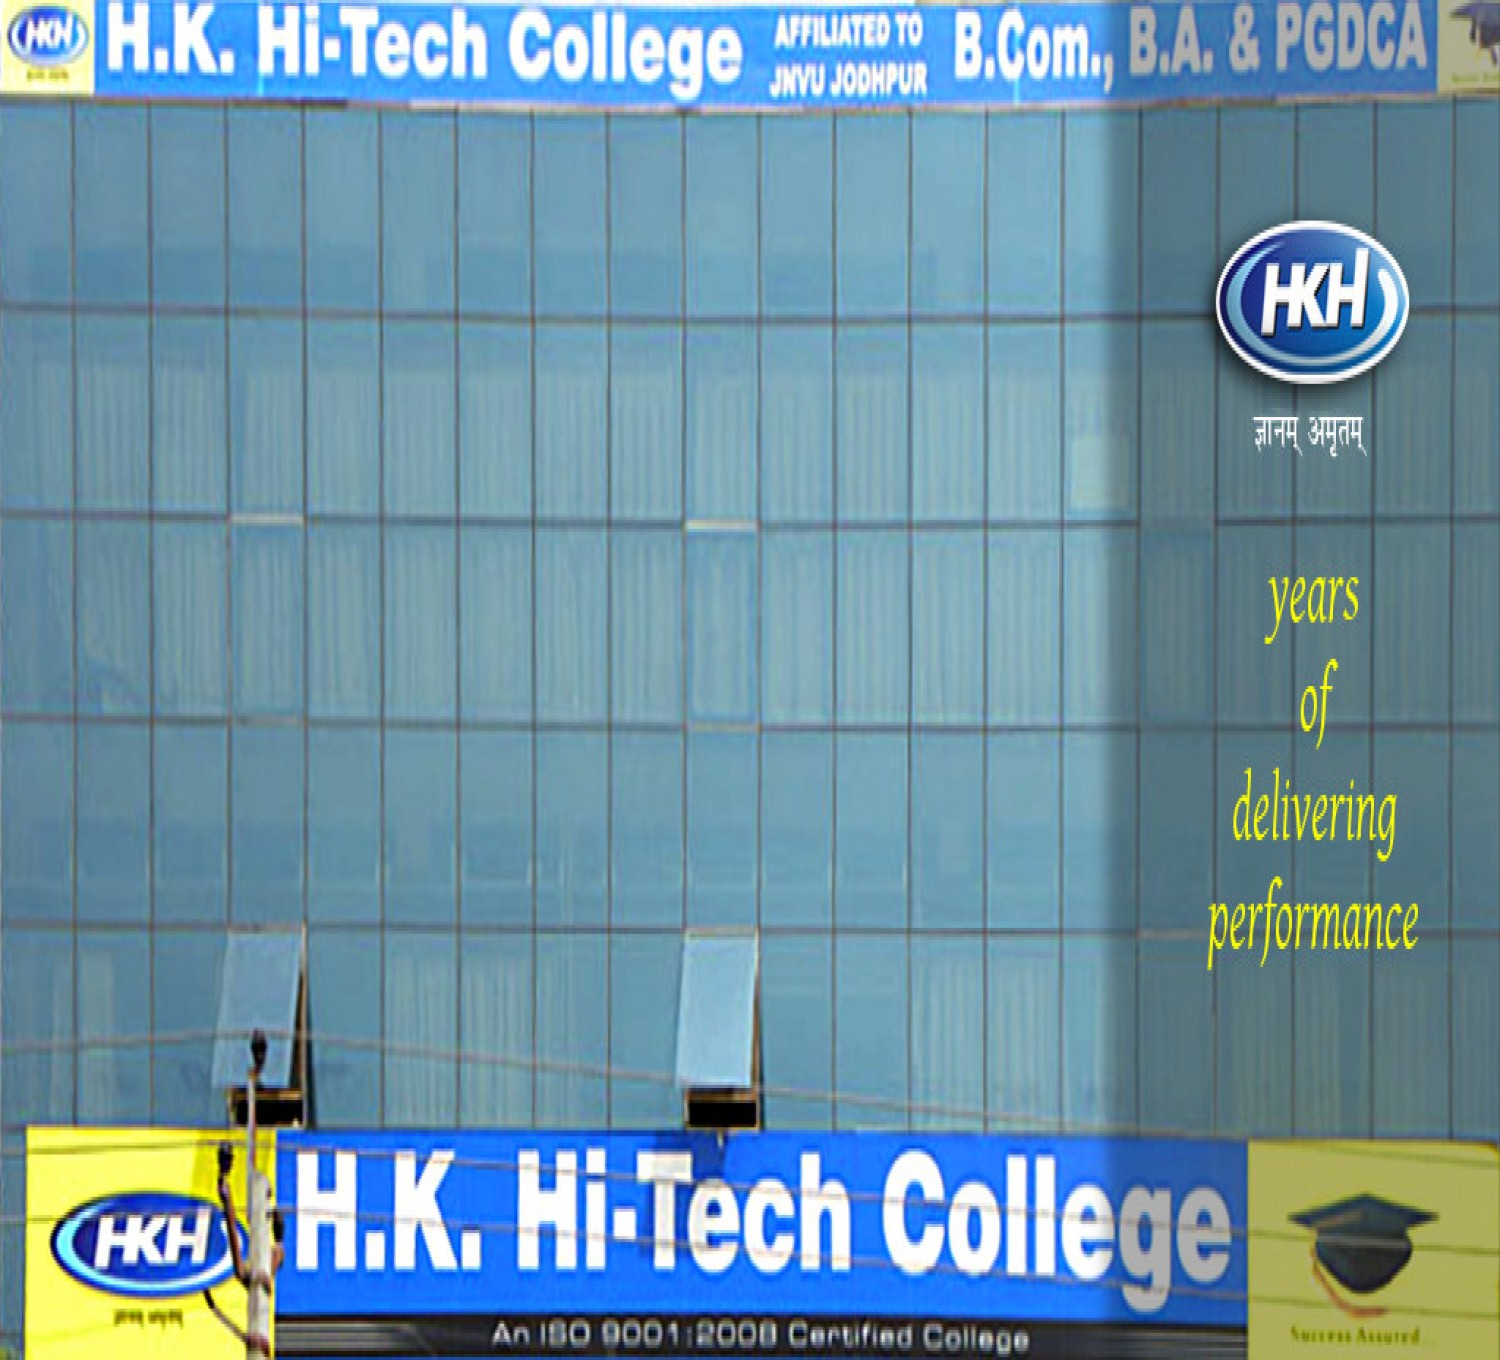 H.K. Hi-tech College-cover